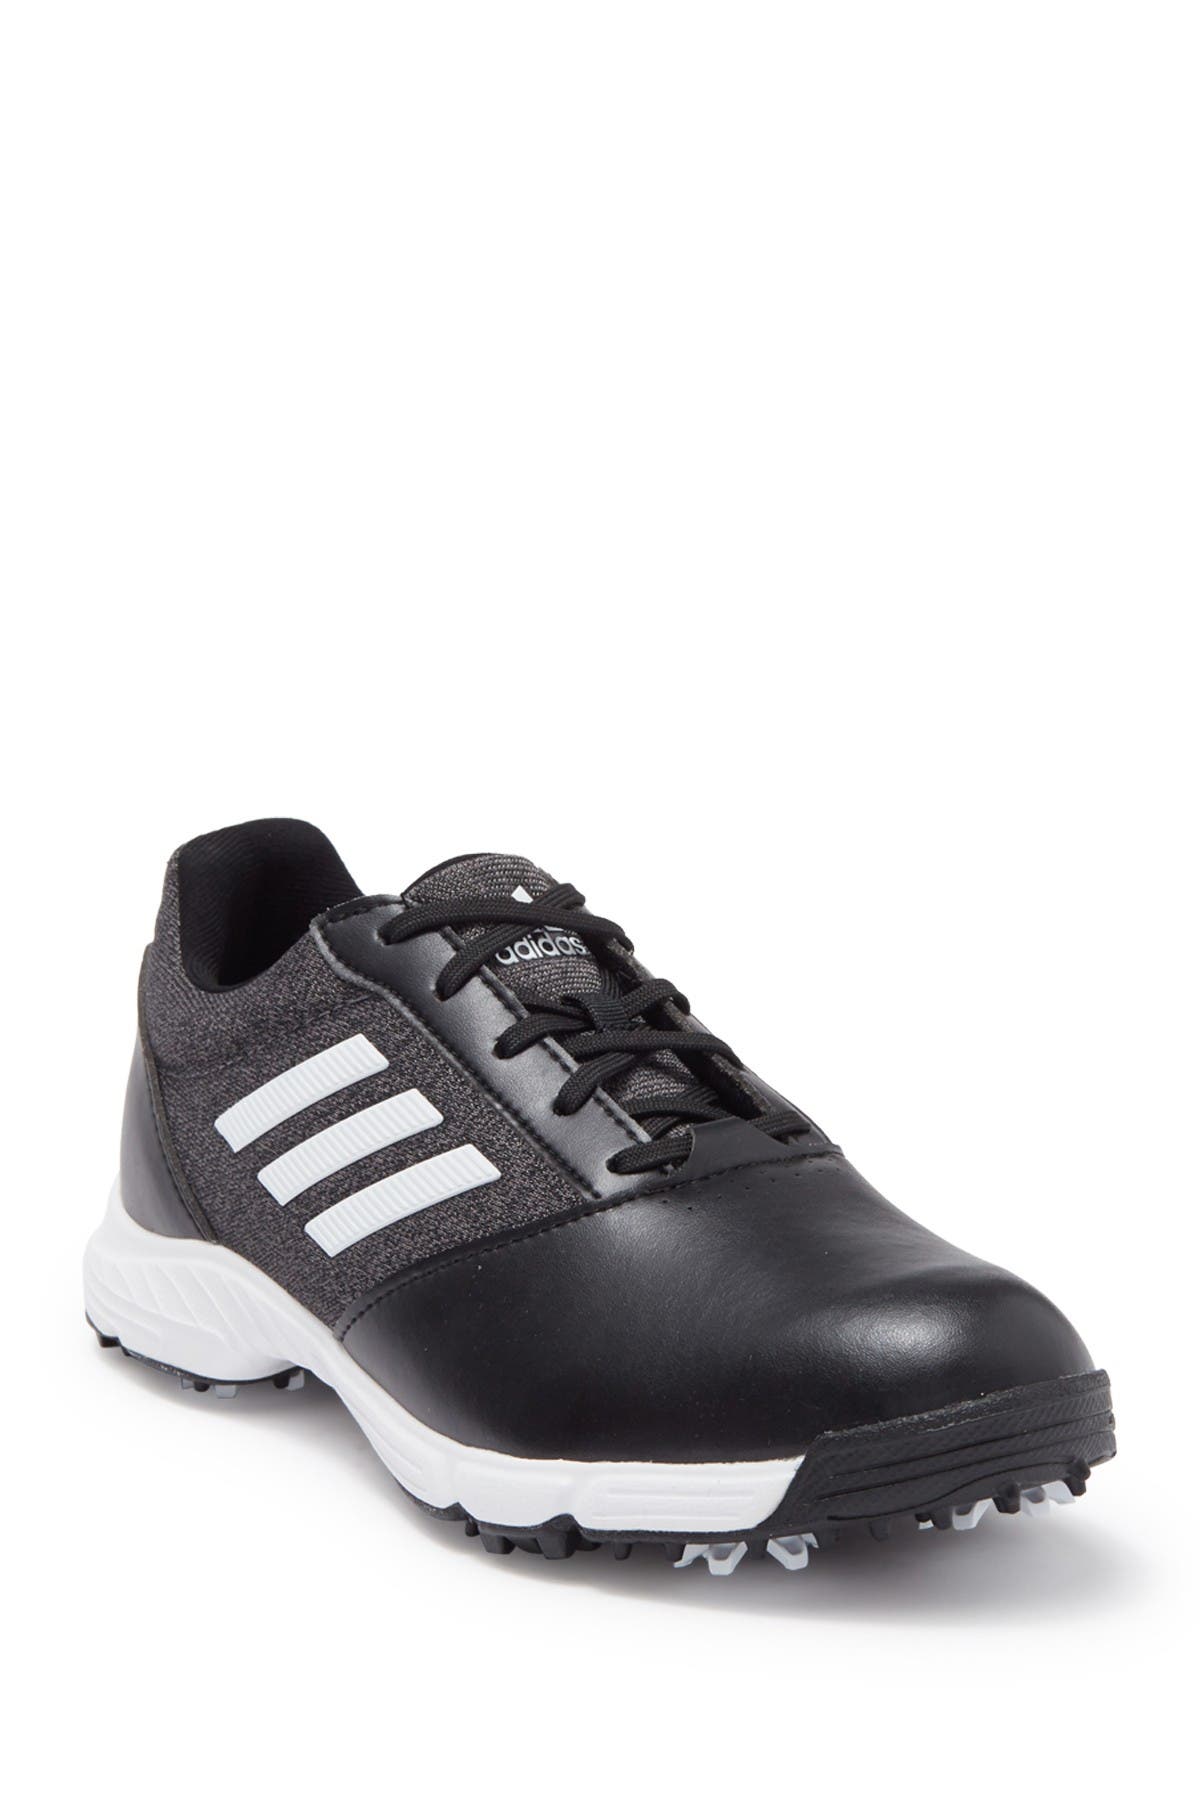 Adidas Golf Tech Response Golf Shoe In Black